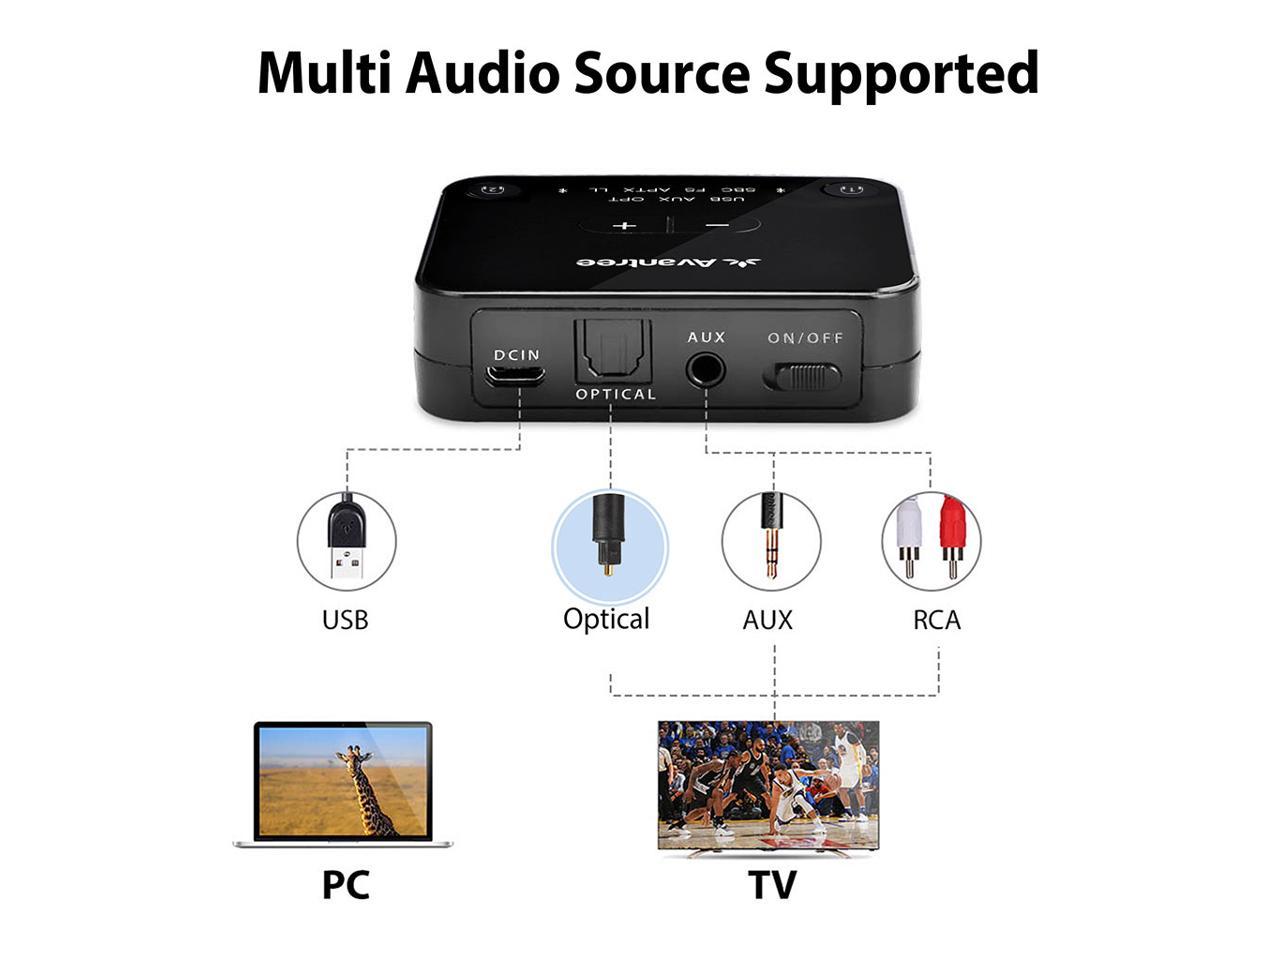 Avantree Audikast aptX Low Latency Bluetooth 4.2 Audio Transmitter for TV PC 